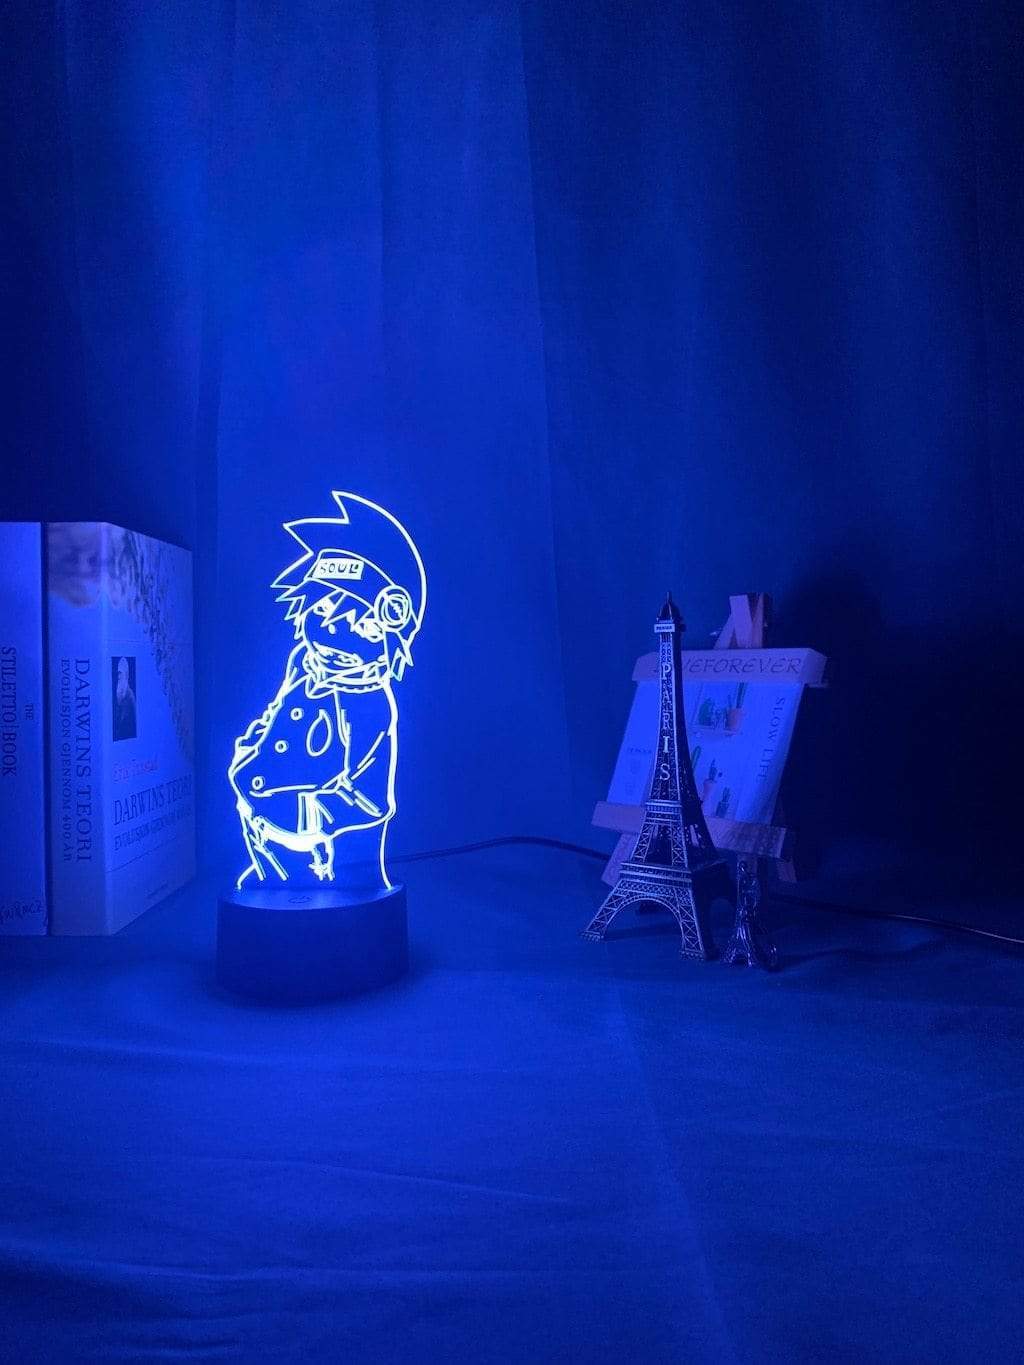 Lampe  Soul Eater Figure Nightlight for Kids Bedroom Decor lampe led 3D